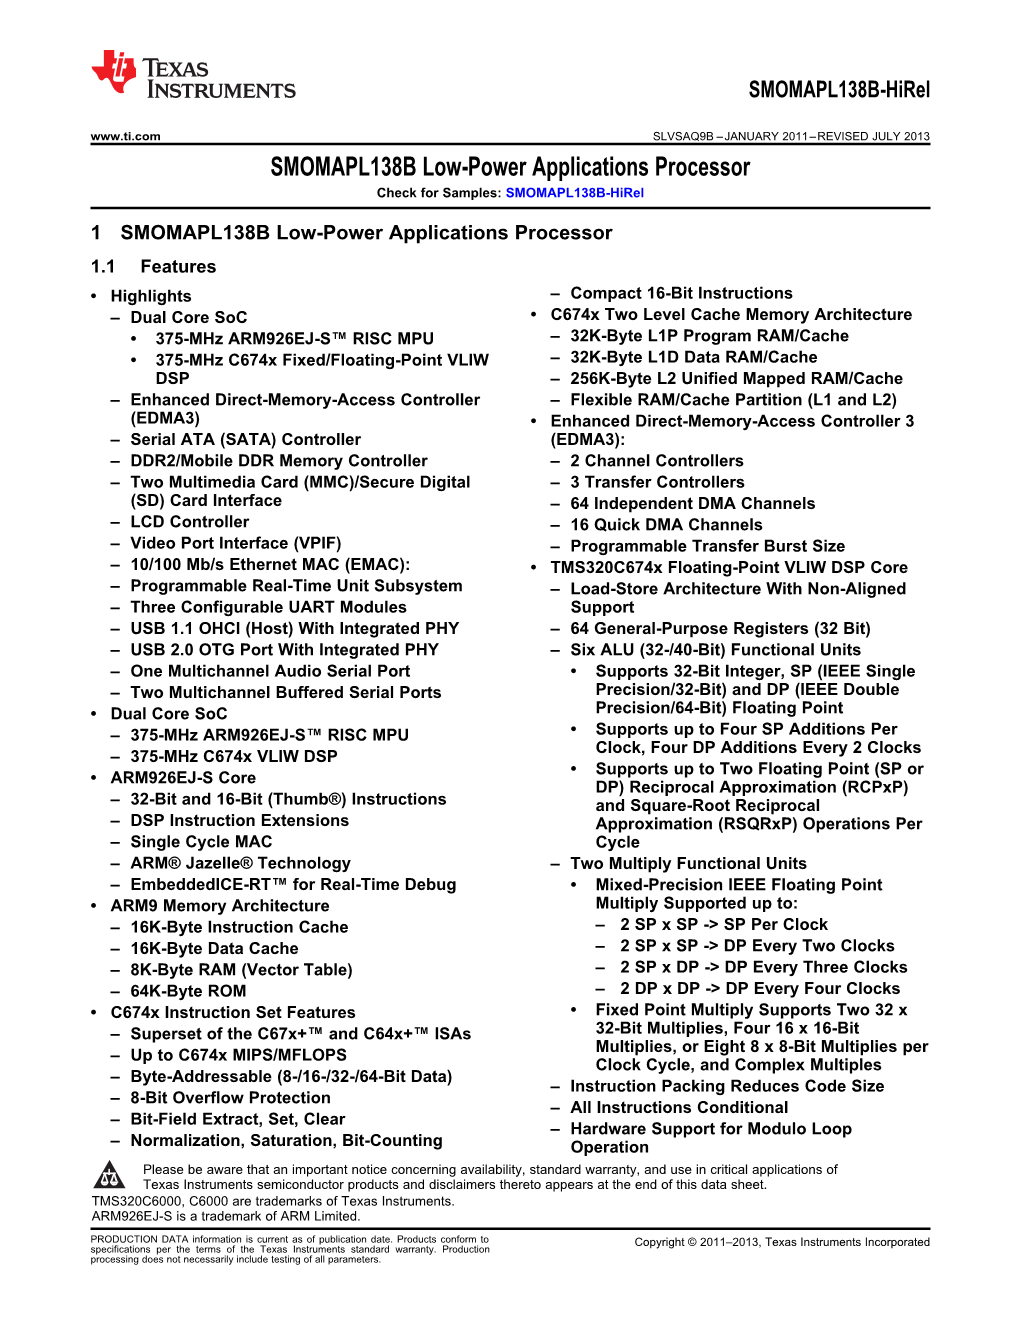 SMOMAPL138B-HIREL Low-Power Applications Processor Datasheet